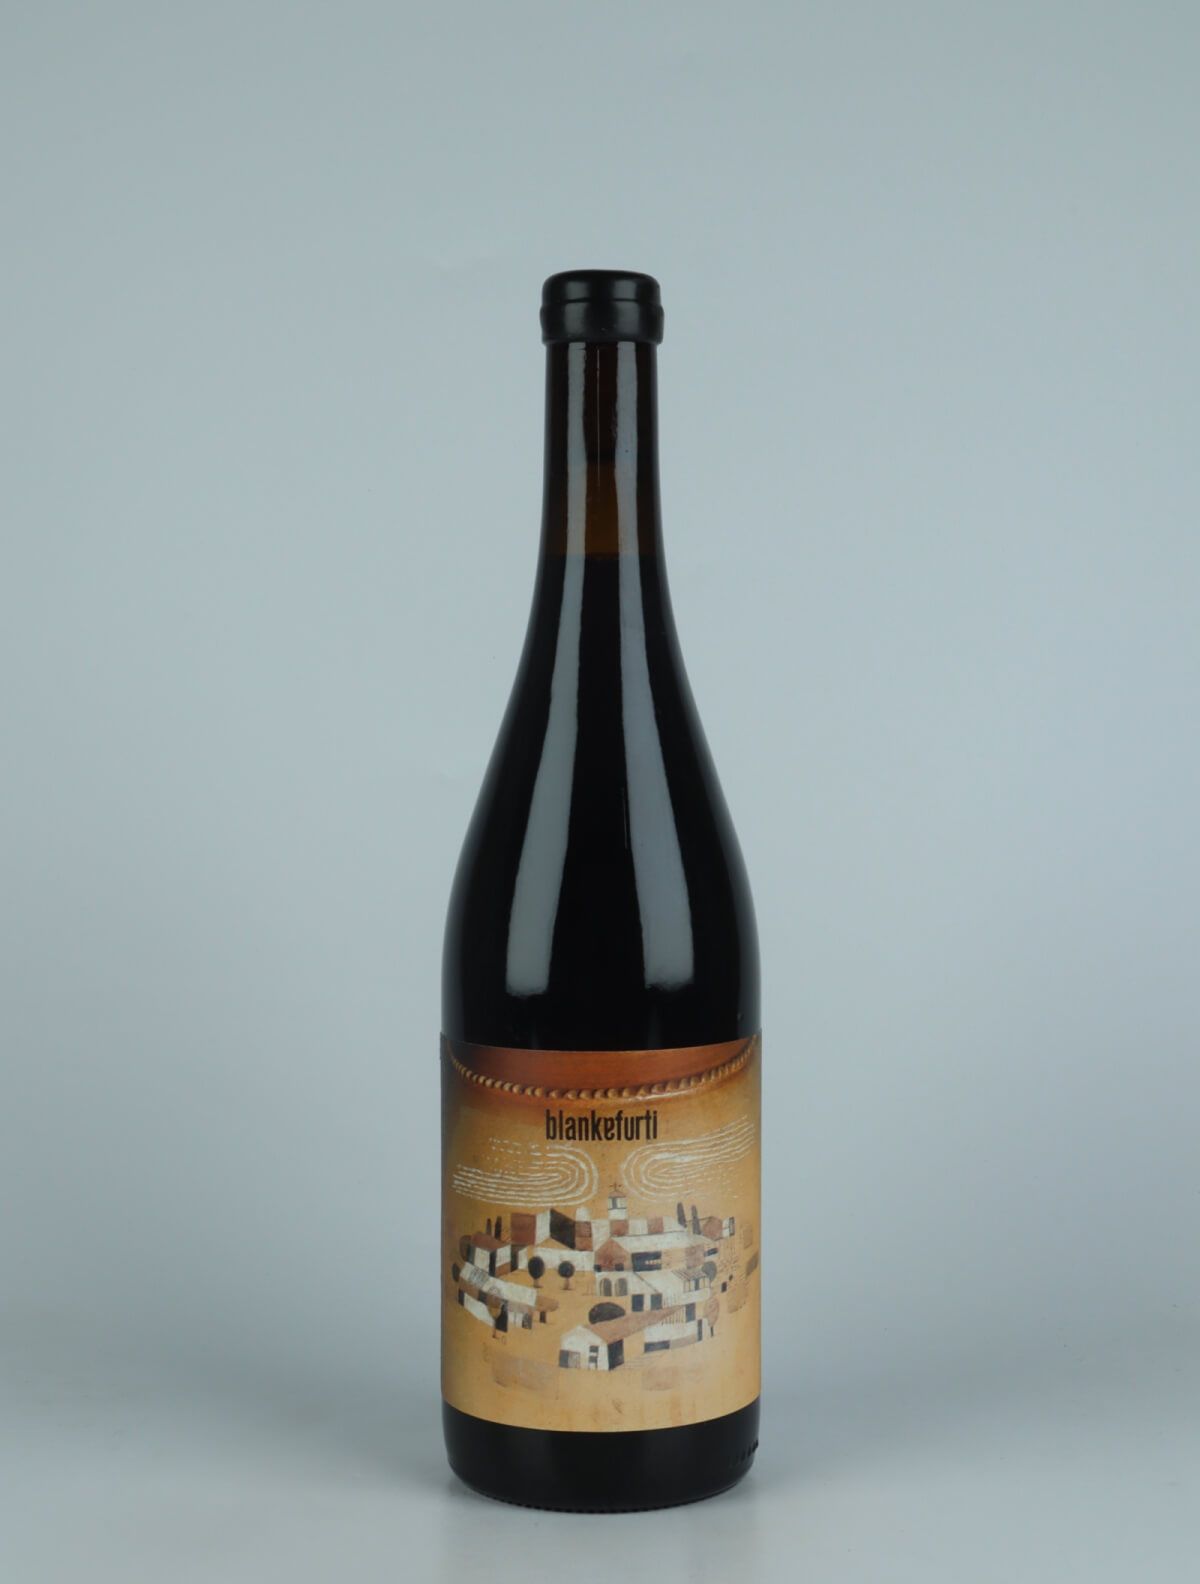 A bottle 2022 Blankaforti Red wine from Jordi Llorens, Catalonia in Spain